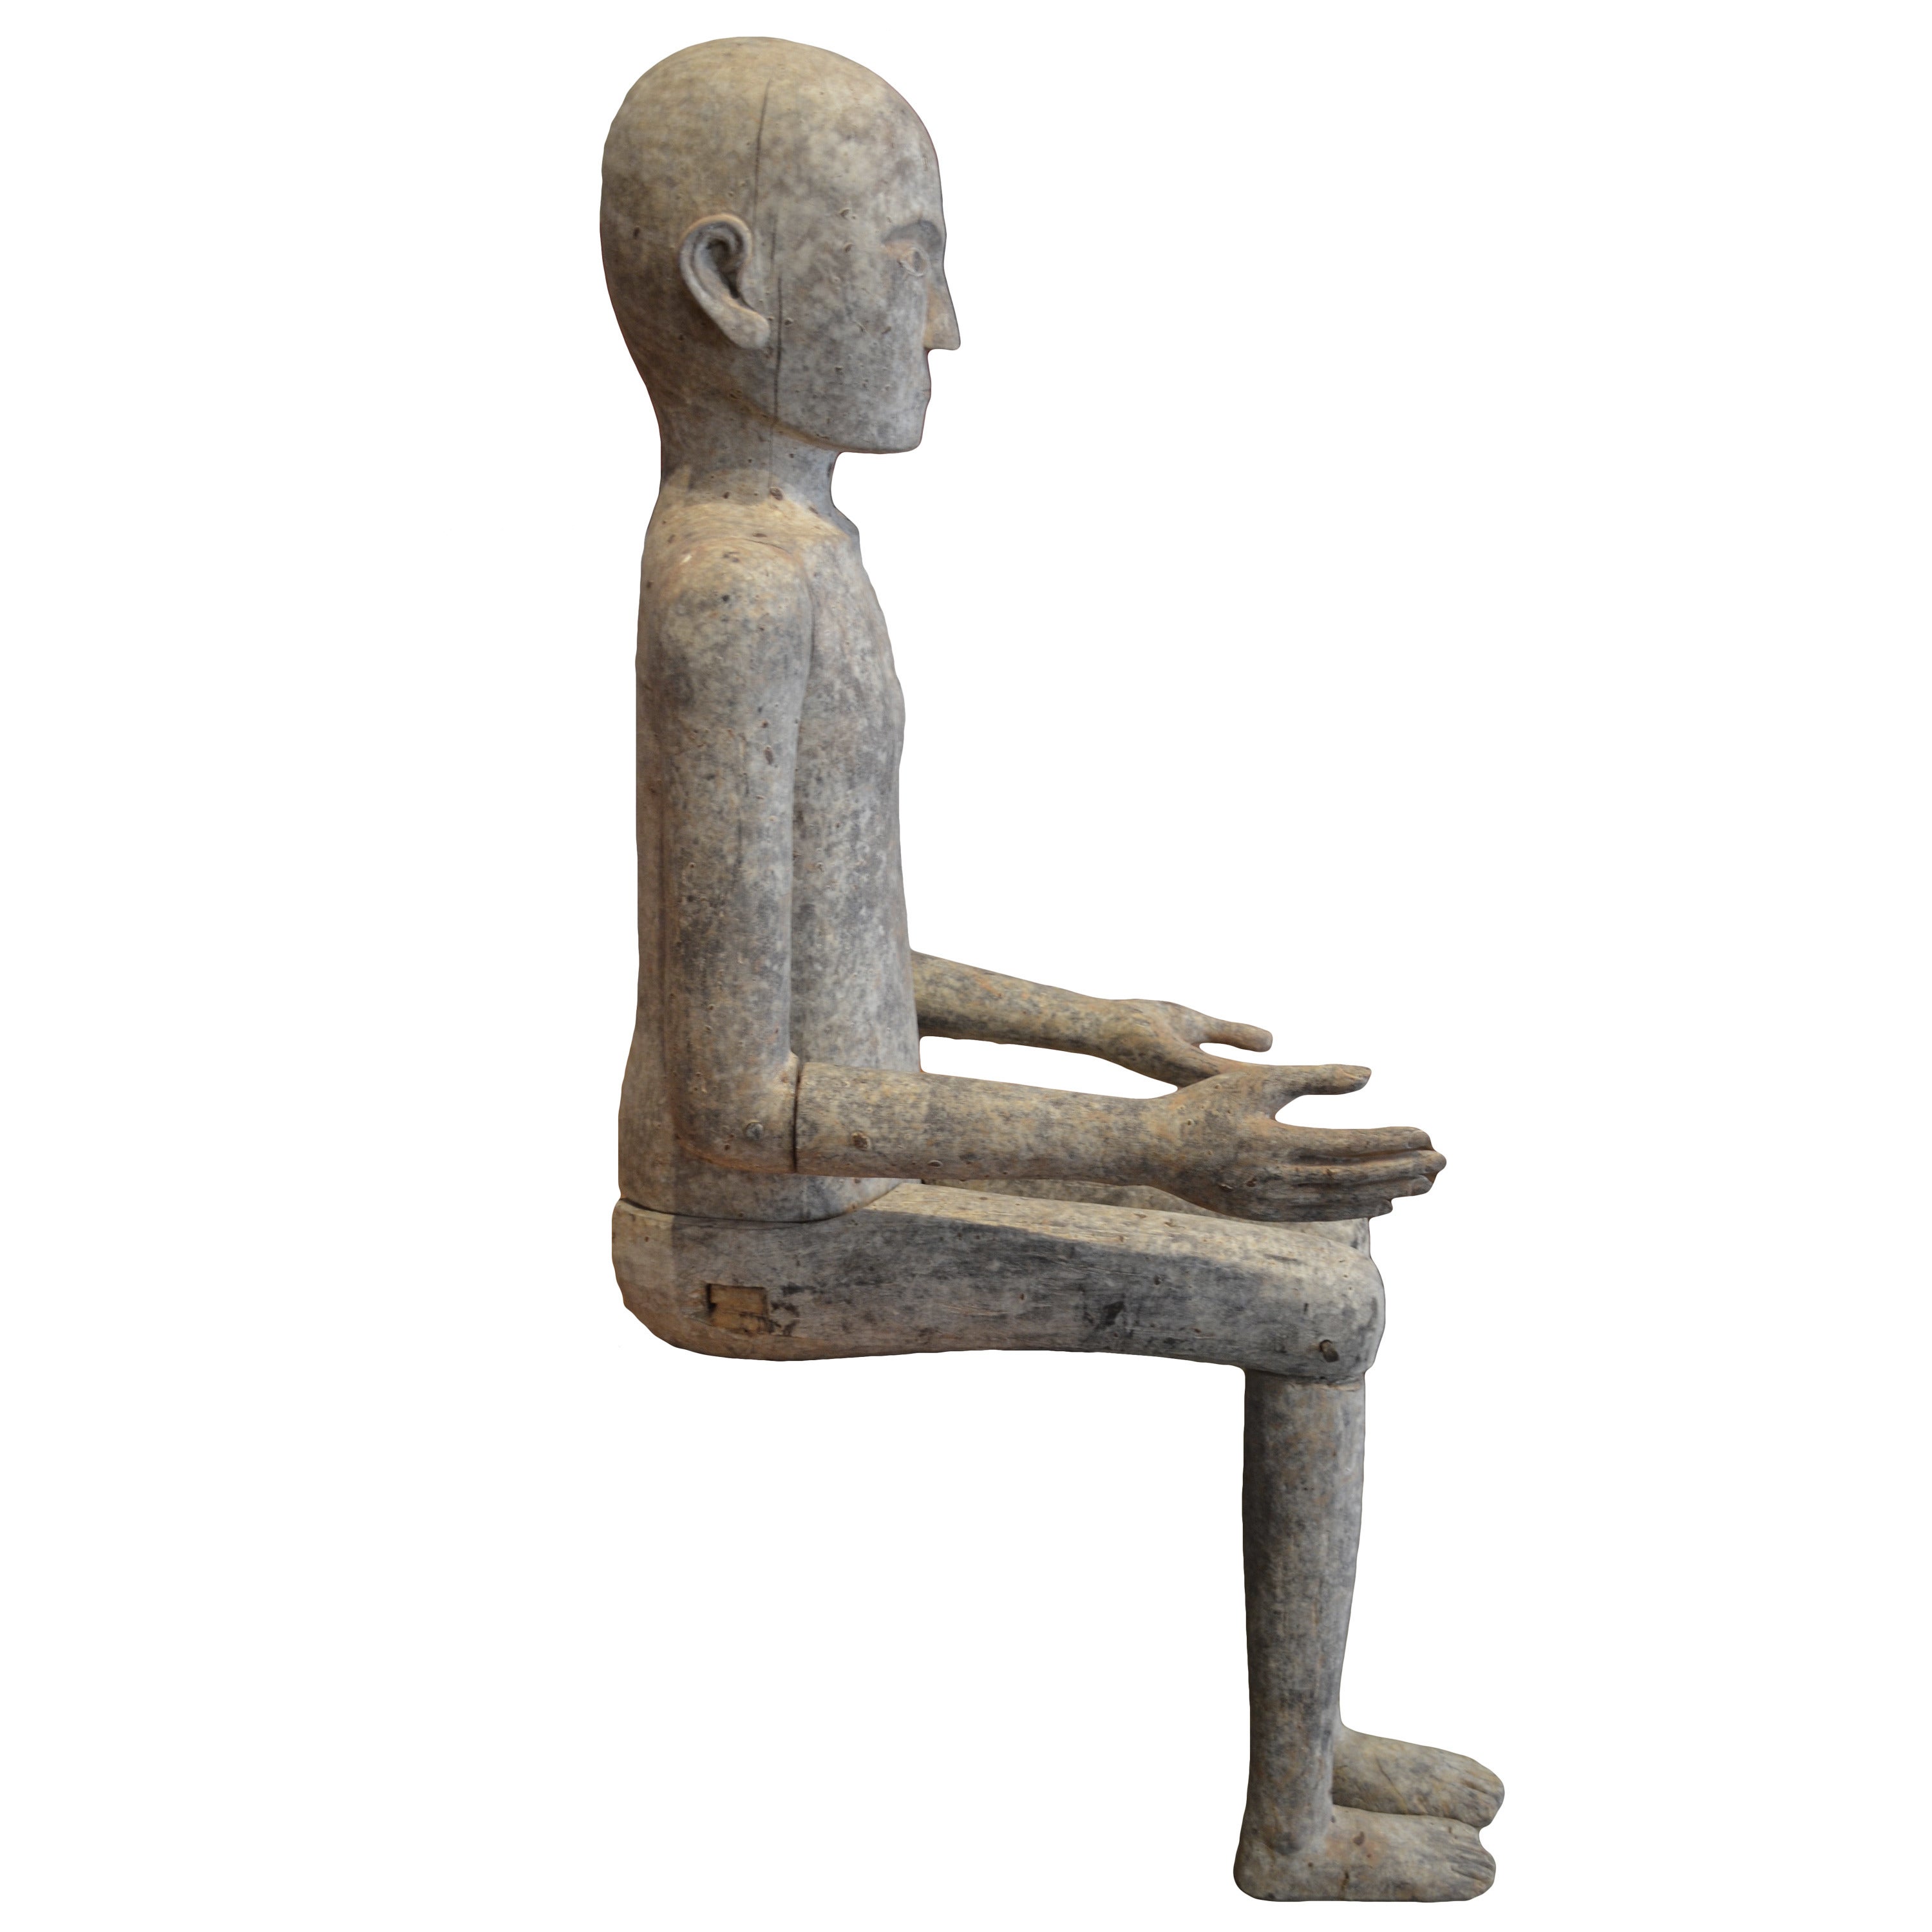 Antique Teak Wood Hand-Carved Sitting Man Statue